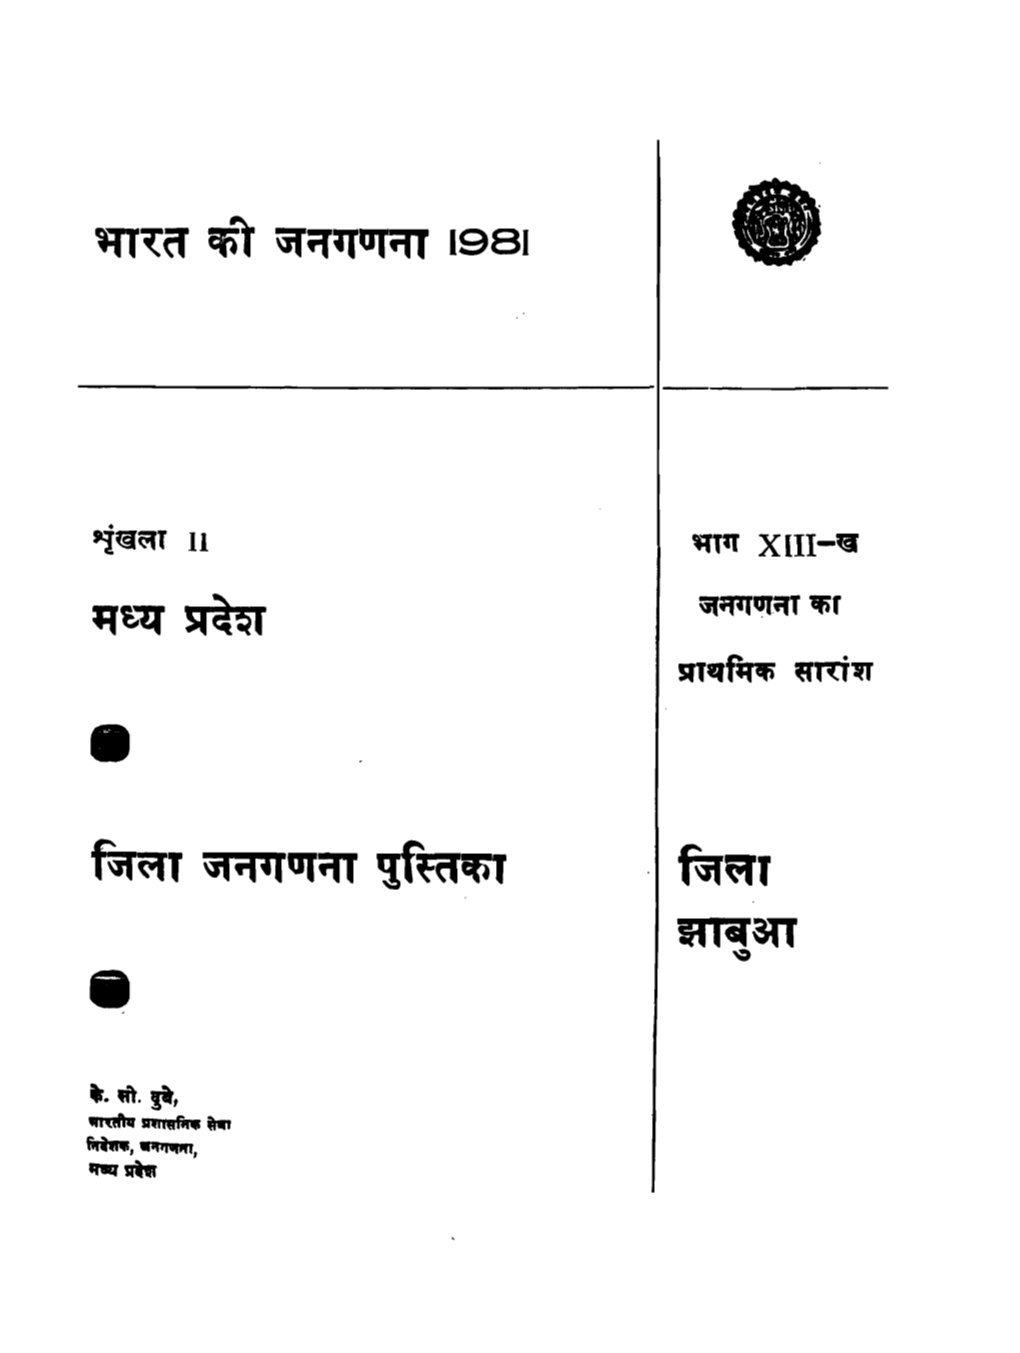 Madhya Pradesh, Bhopal and Hi'! Staff for the Printing Arrangements Made